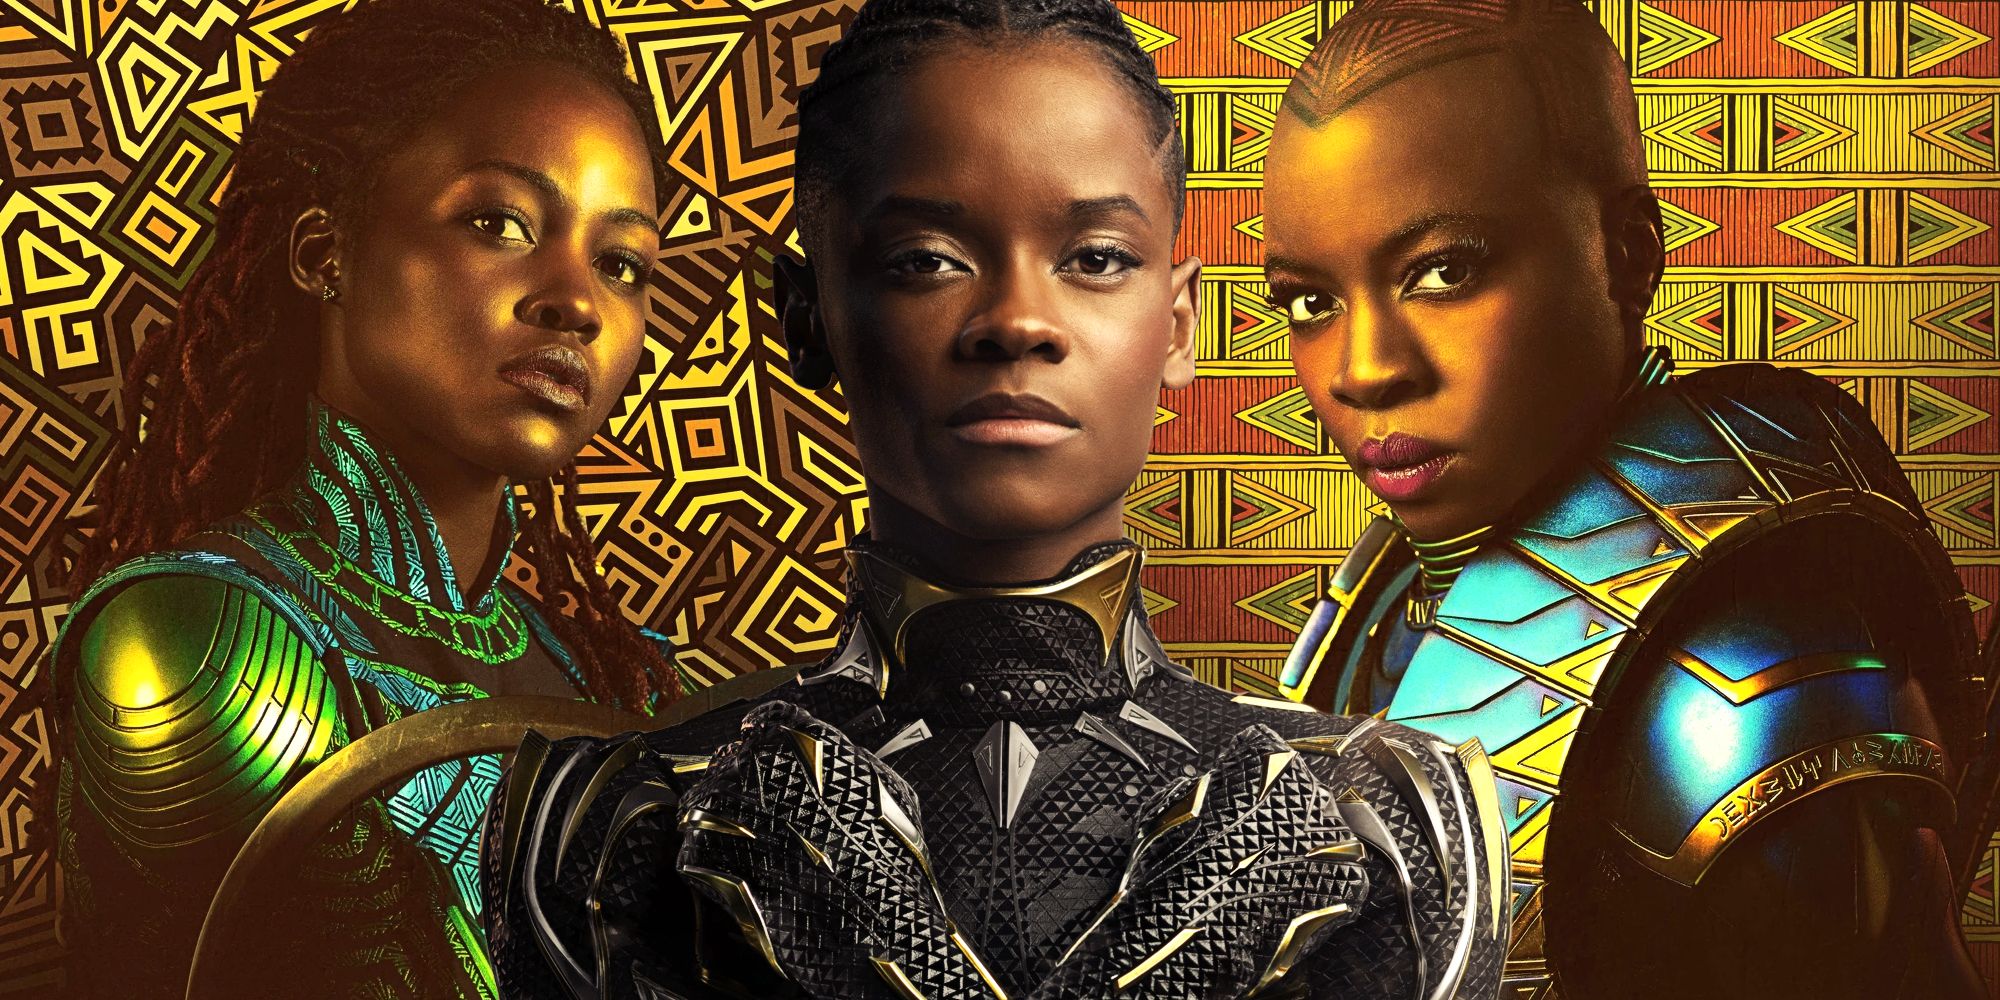 Lupita Nyong'o as Nakia, Letitia Wright as Shuri, and Danai Gurira as Okoye Black Panther Wakanda Forever character posters